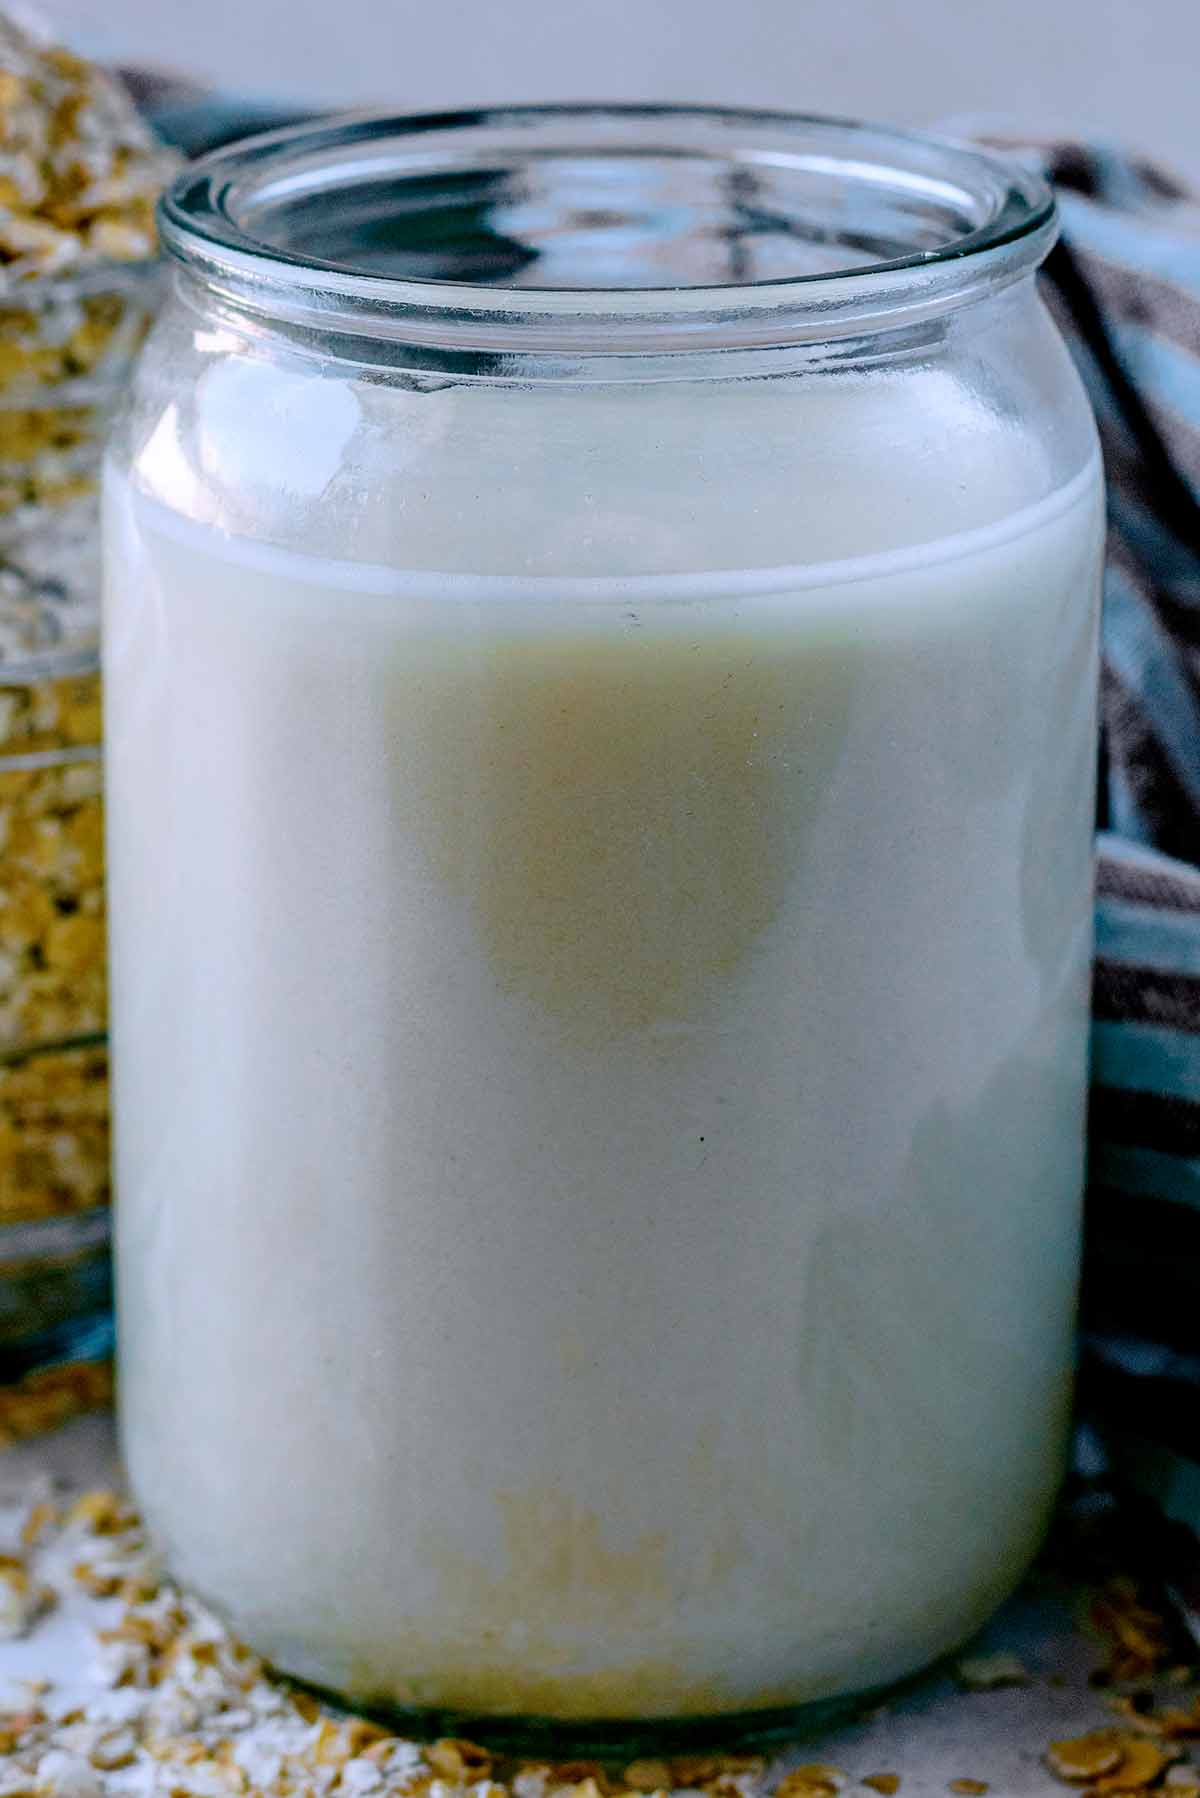 A glass full of oat milk.